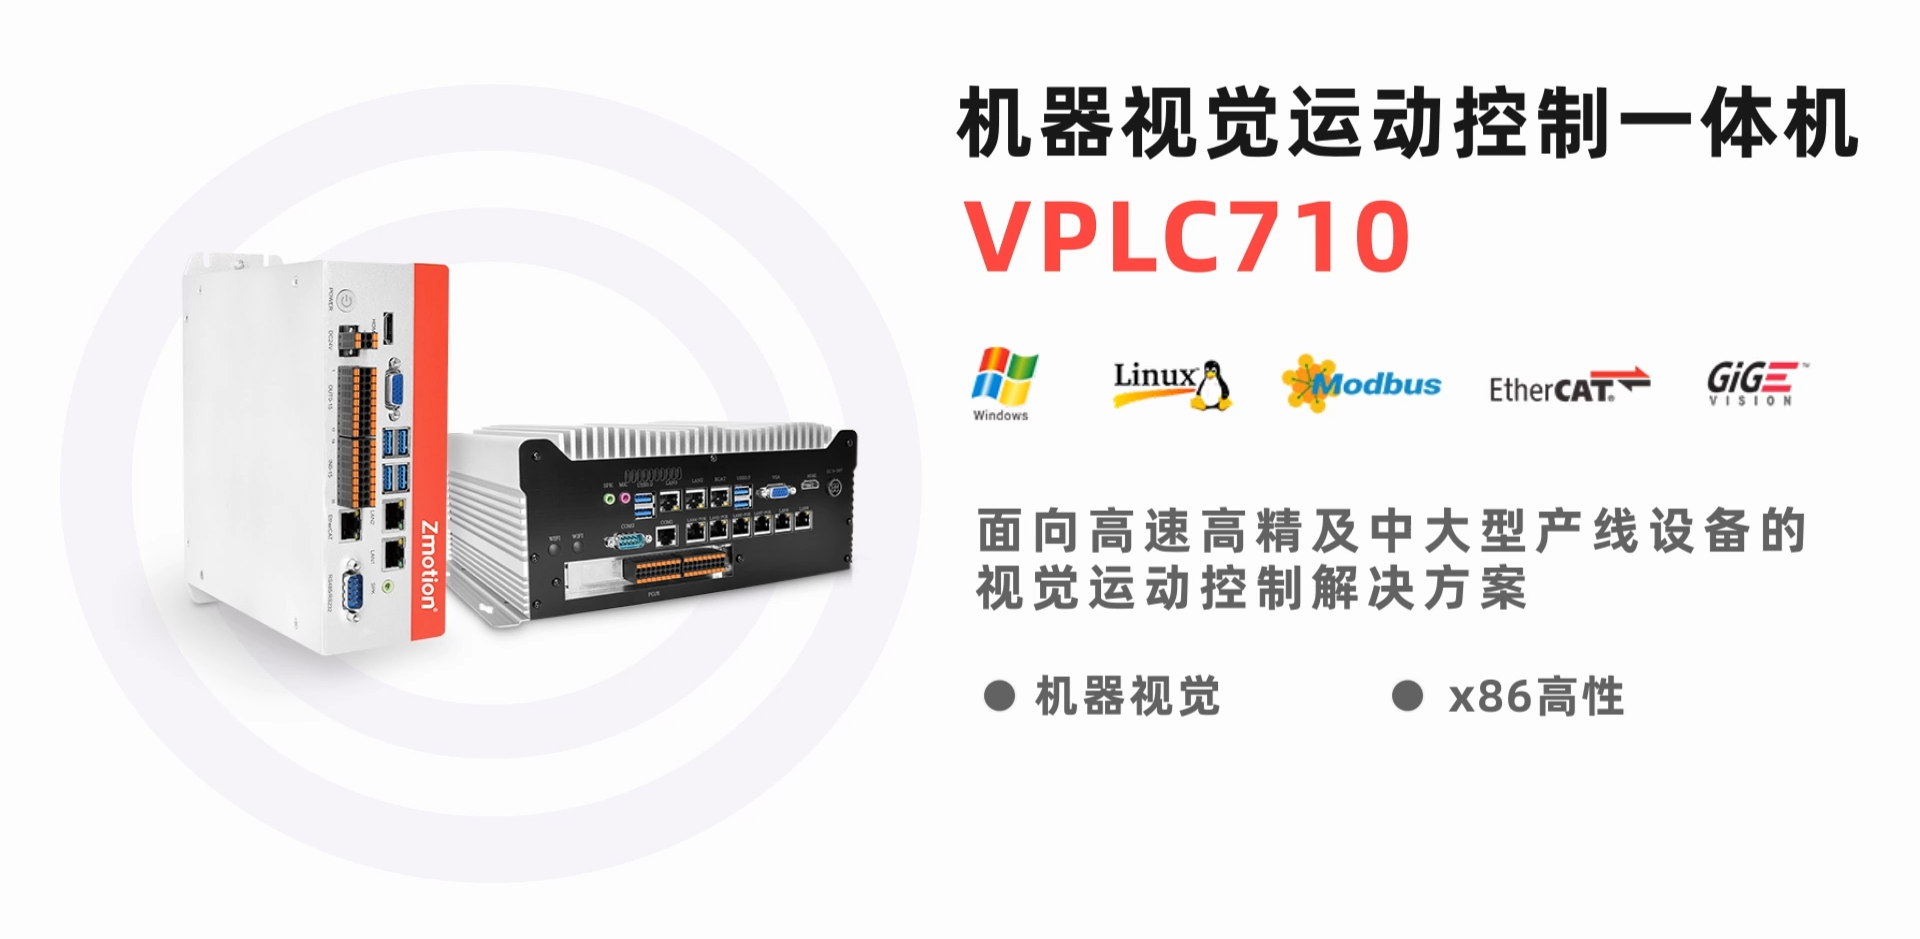 x86机器视觉运动控制一体机VPLC710